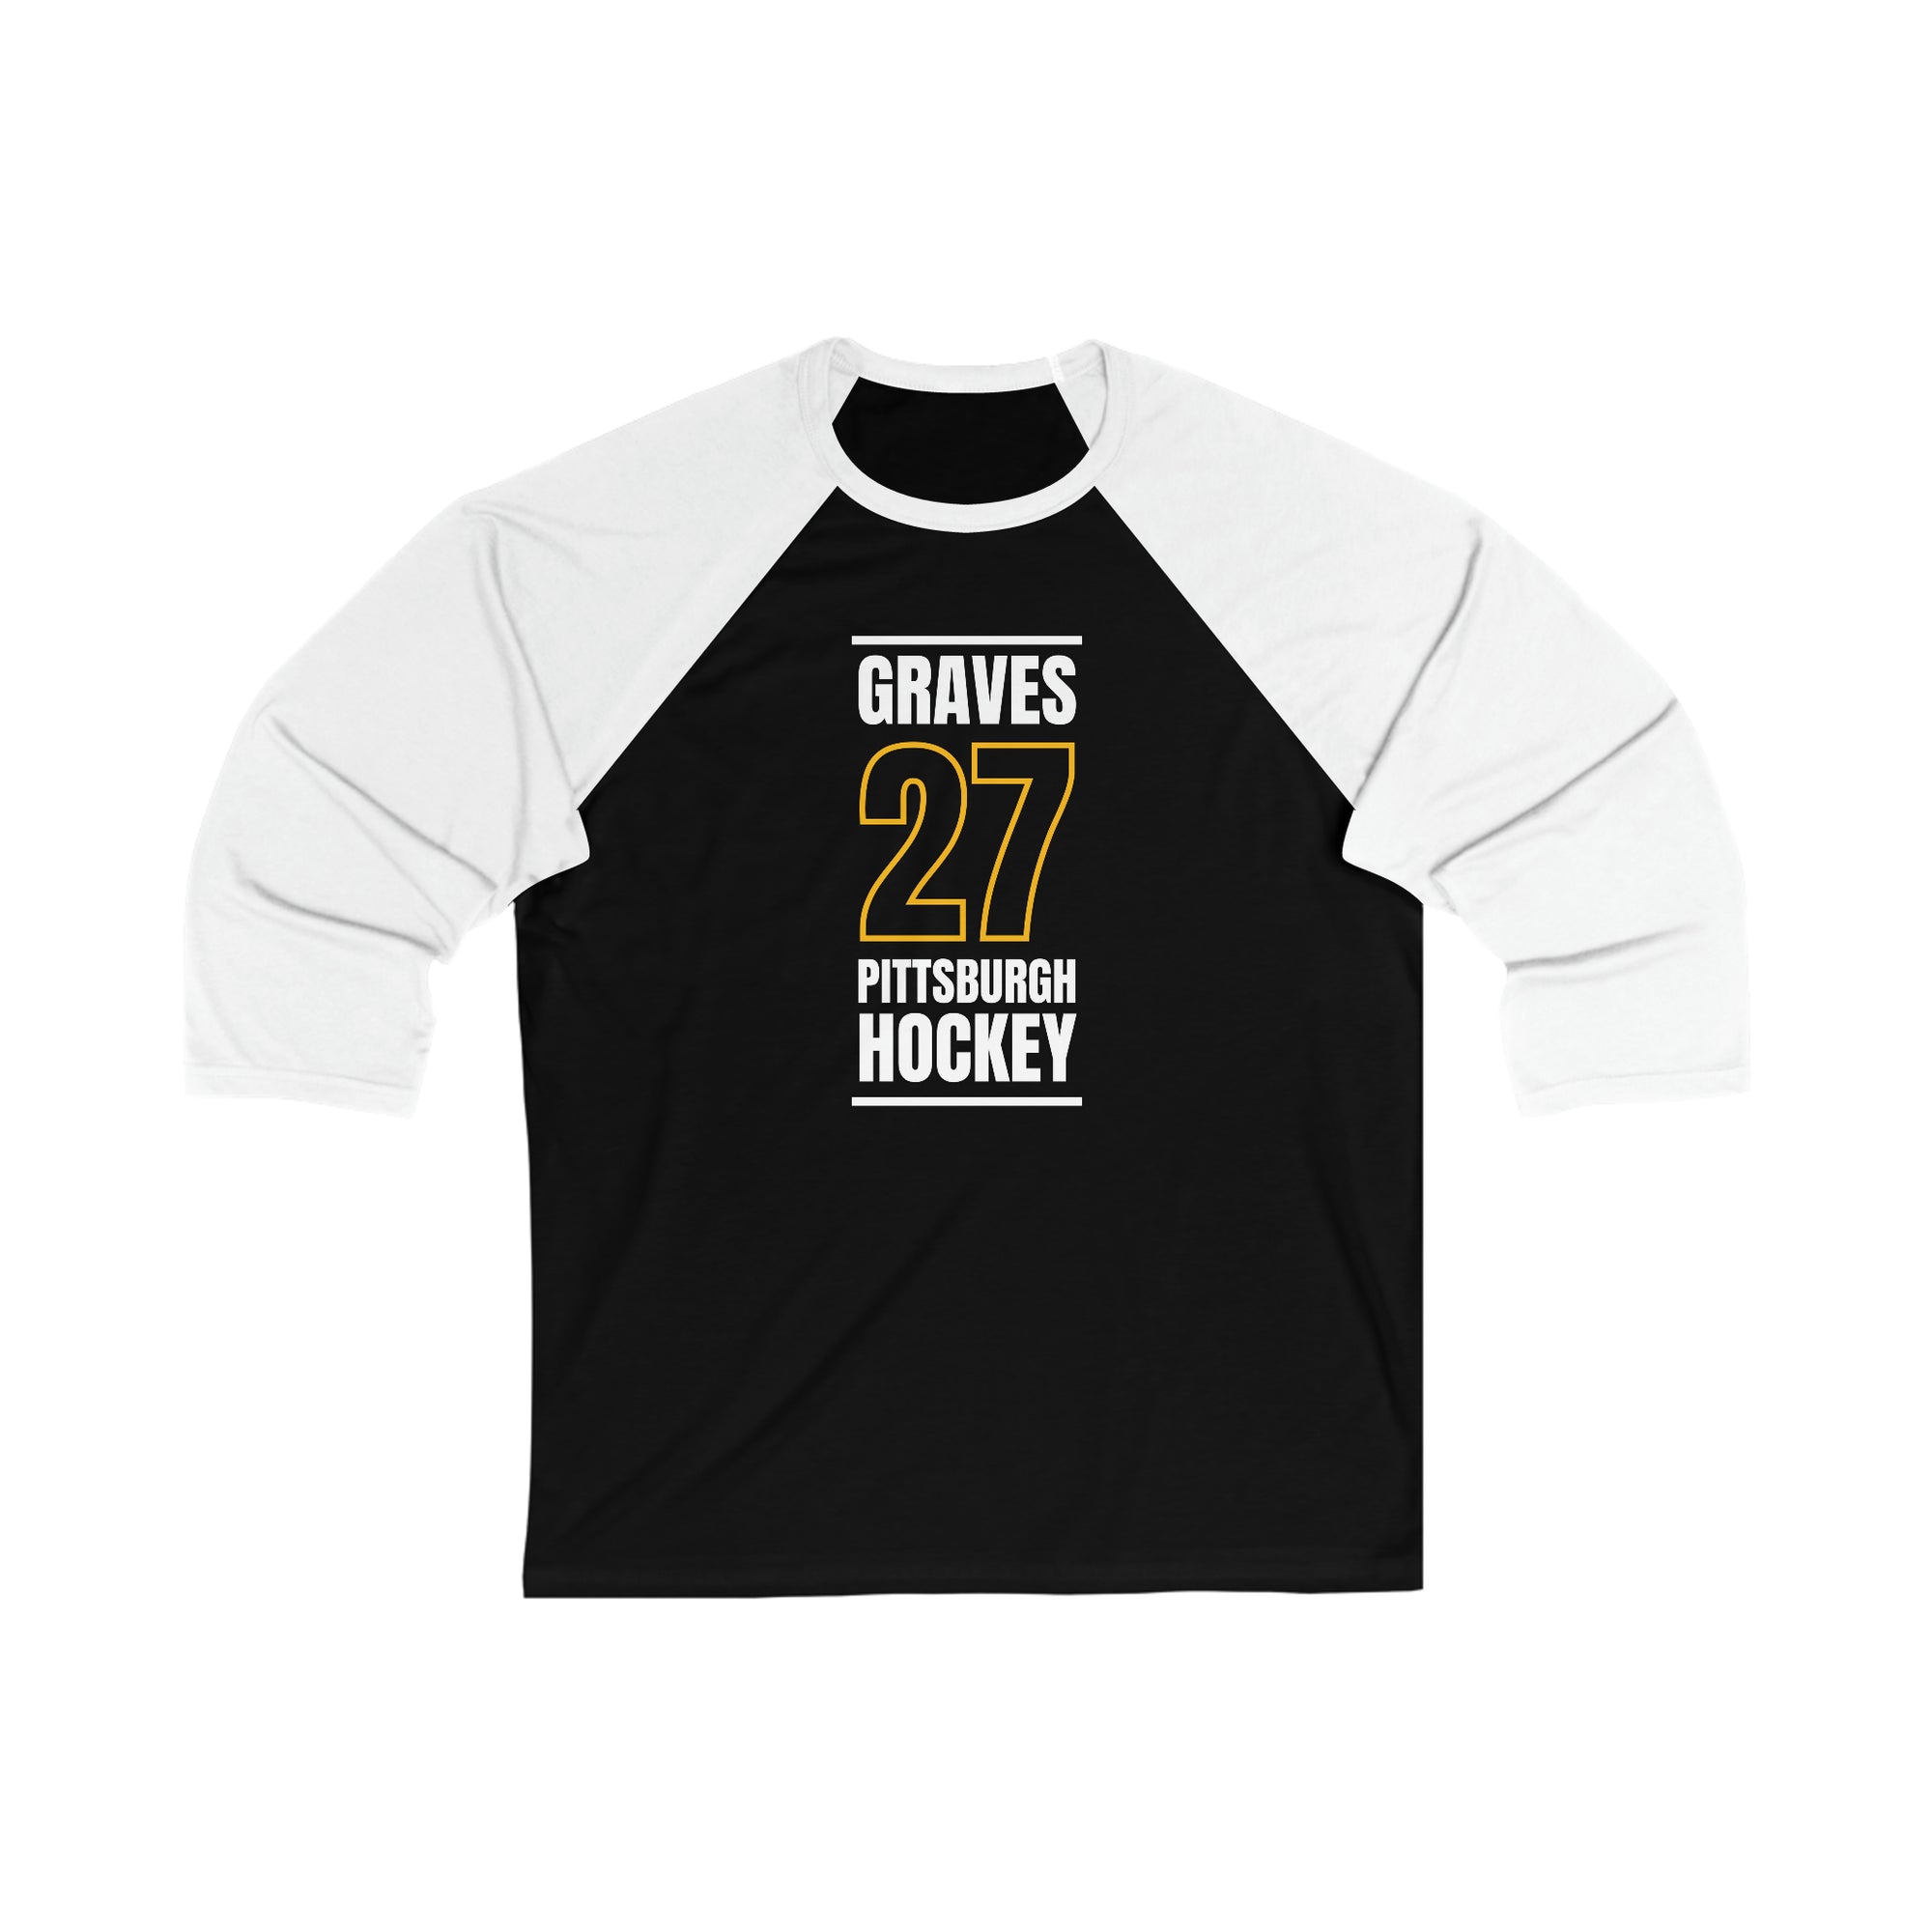 Graves 27 Pittsburgh Hockey Black Vertical Design Unisex Tri-Blend 3/4 Sleeve Raglan Baseball Shirt